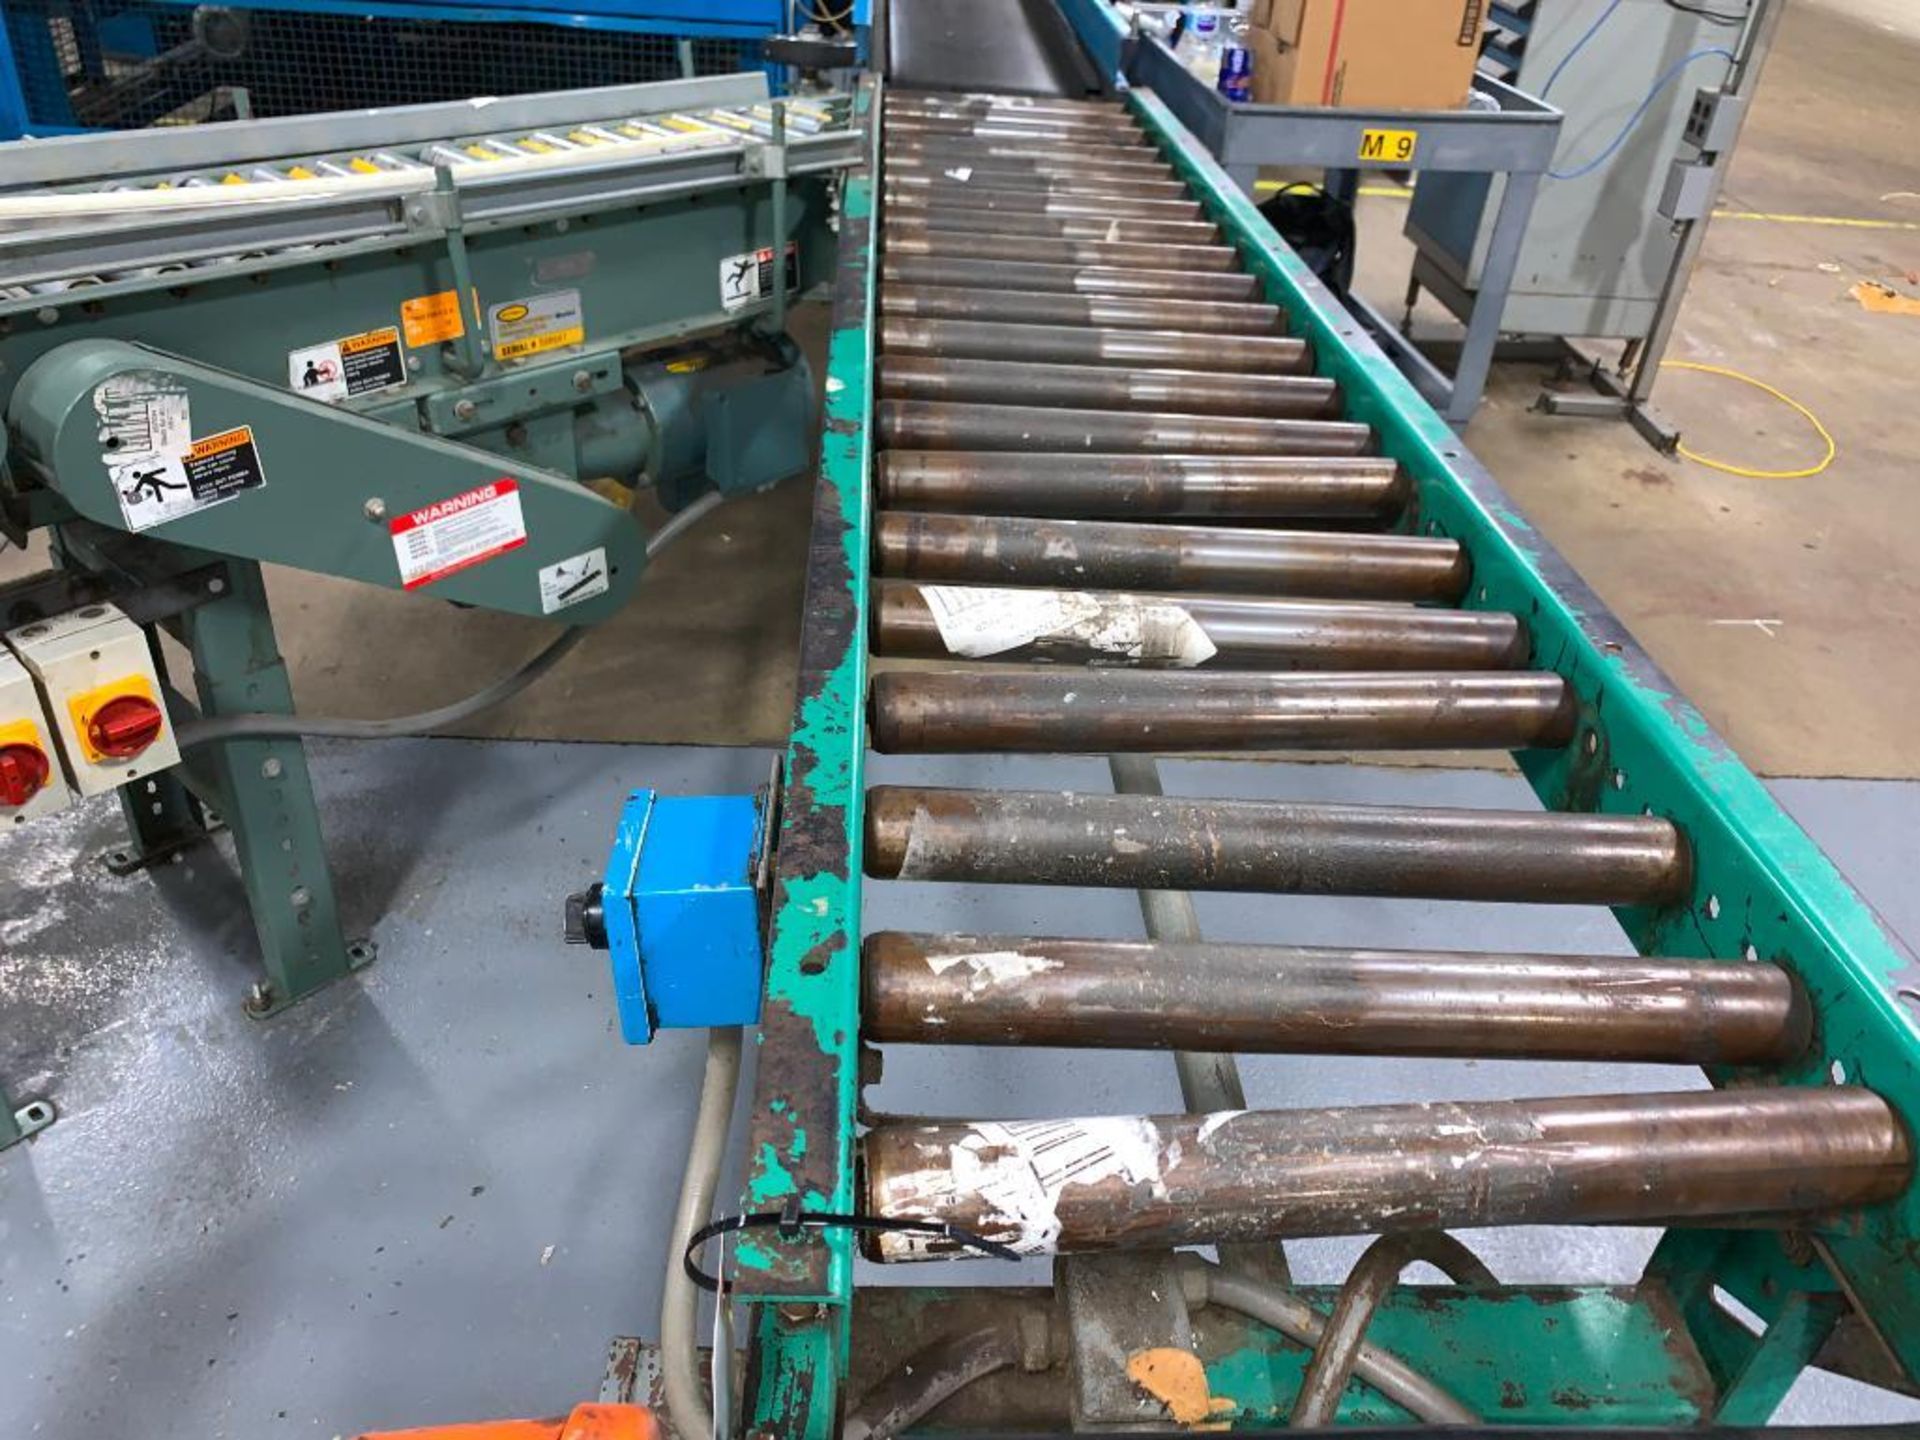 Hytrol mild steel rubber belt and power roller conveyor - Image 7 of 11